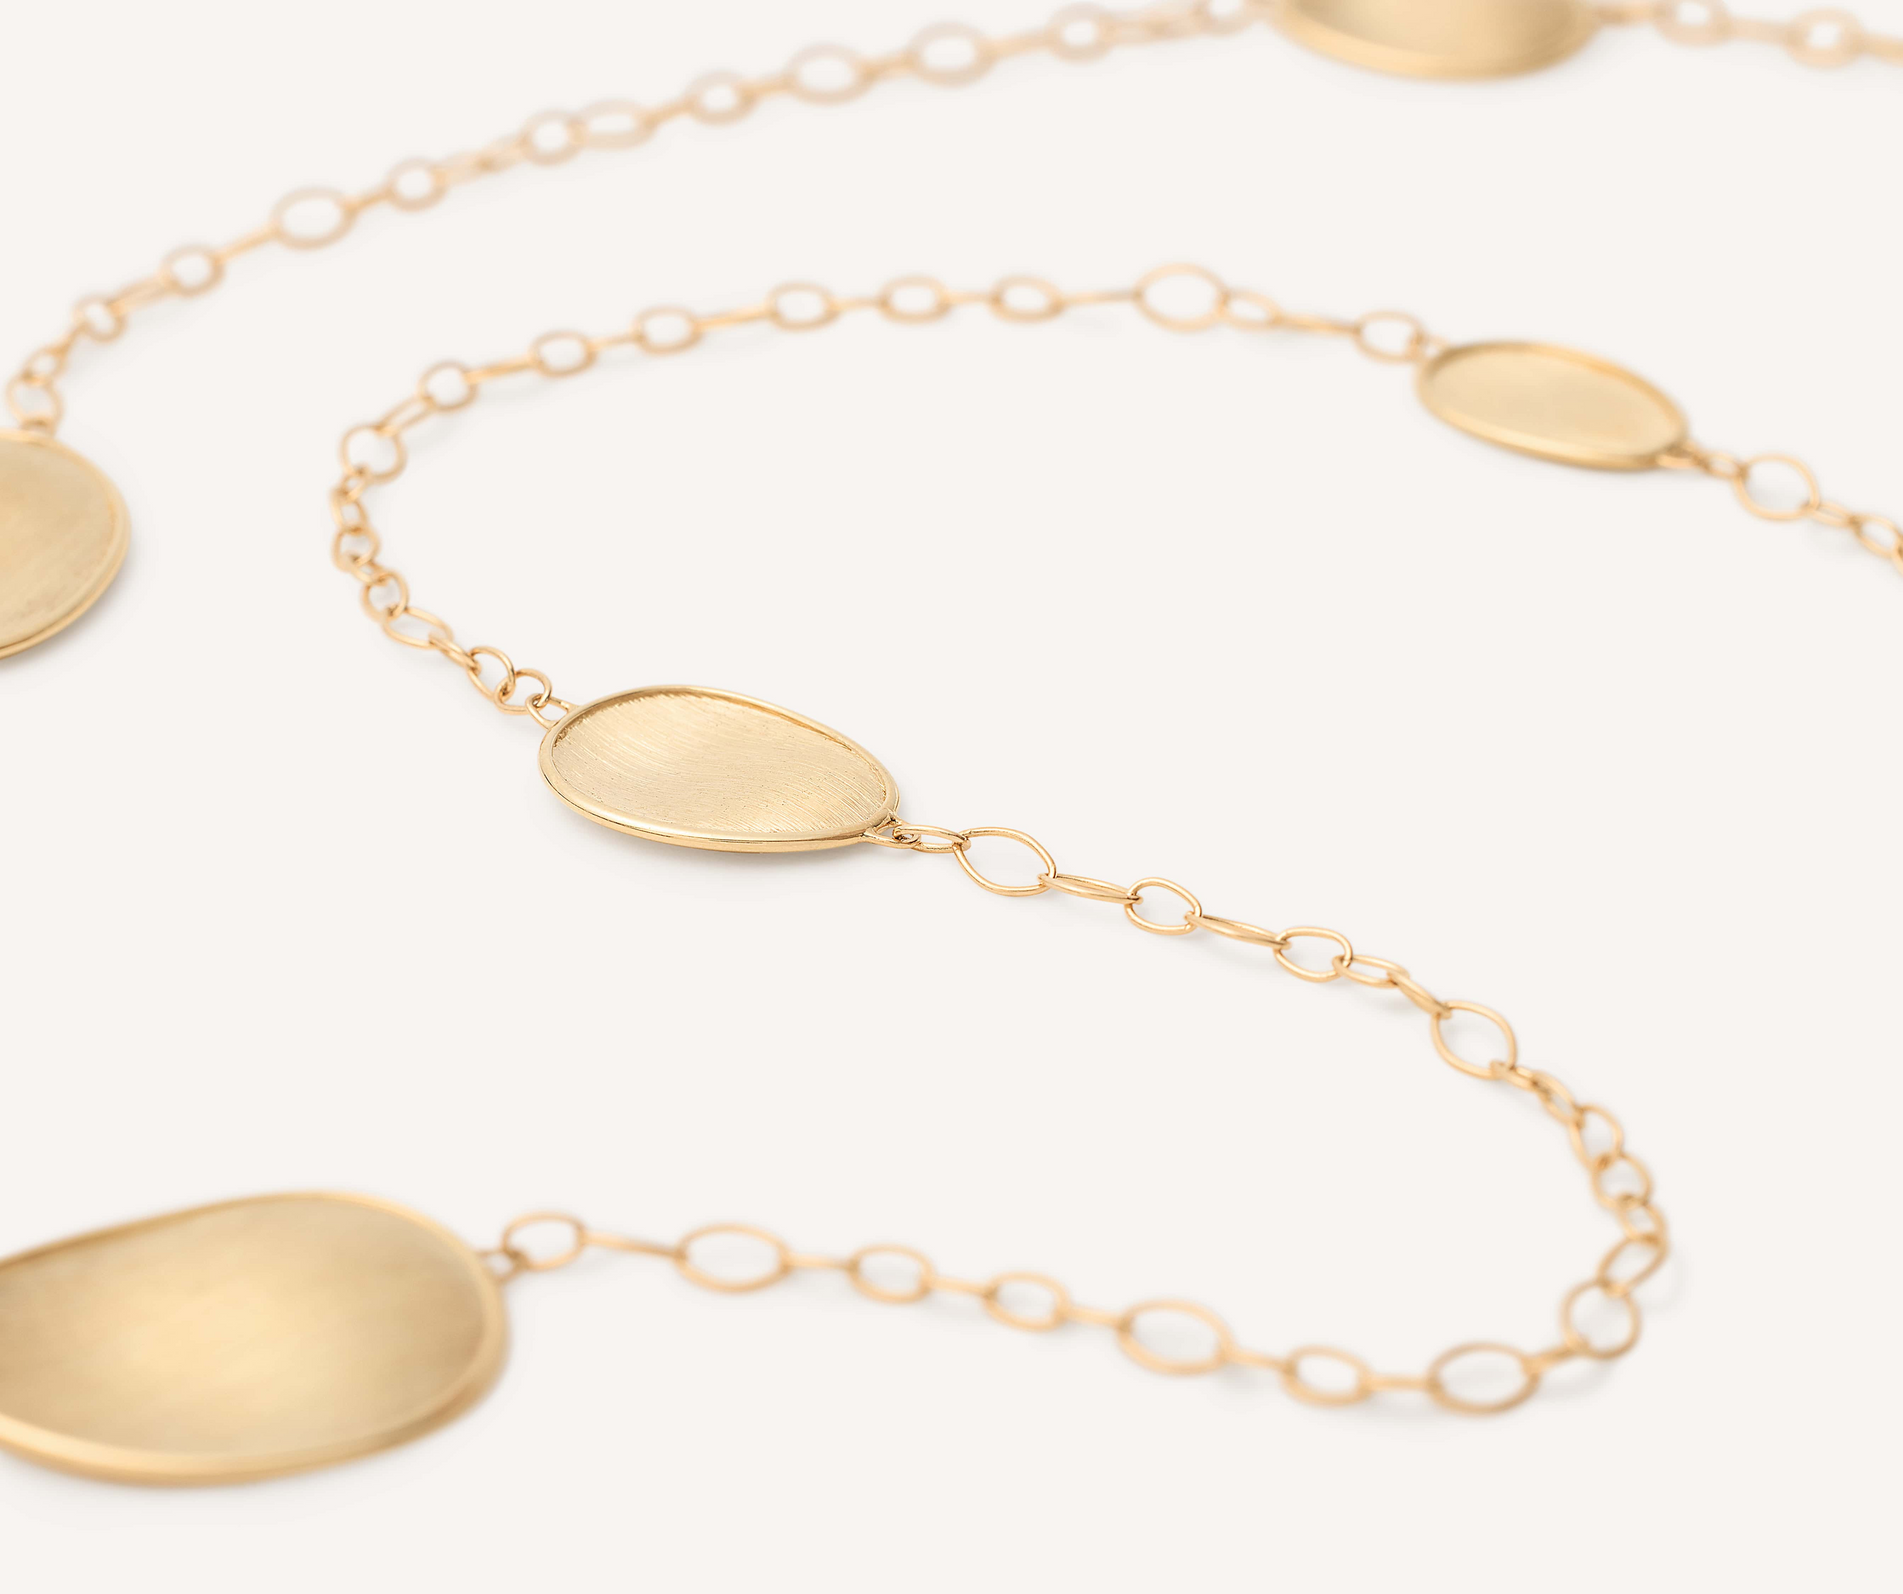 Marco Bicego Lunaria 18k Gold Necklace Irregular Long - Orsini Jewellers